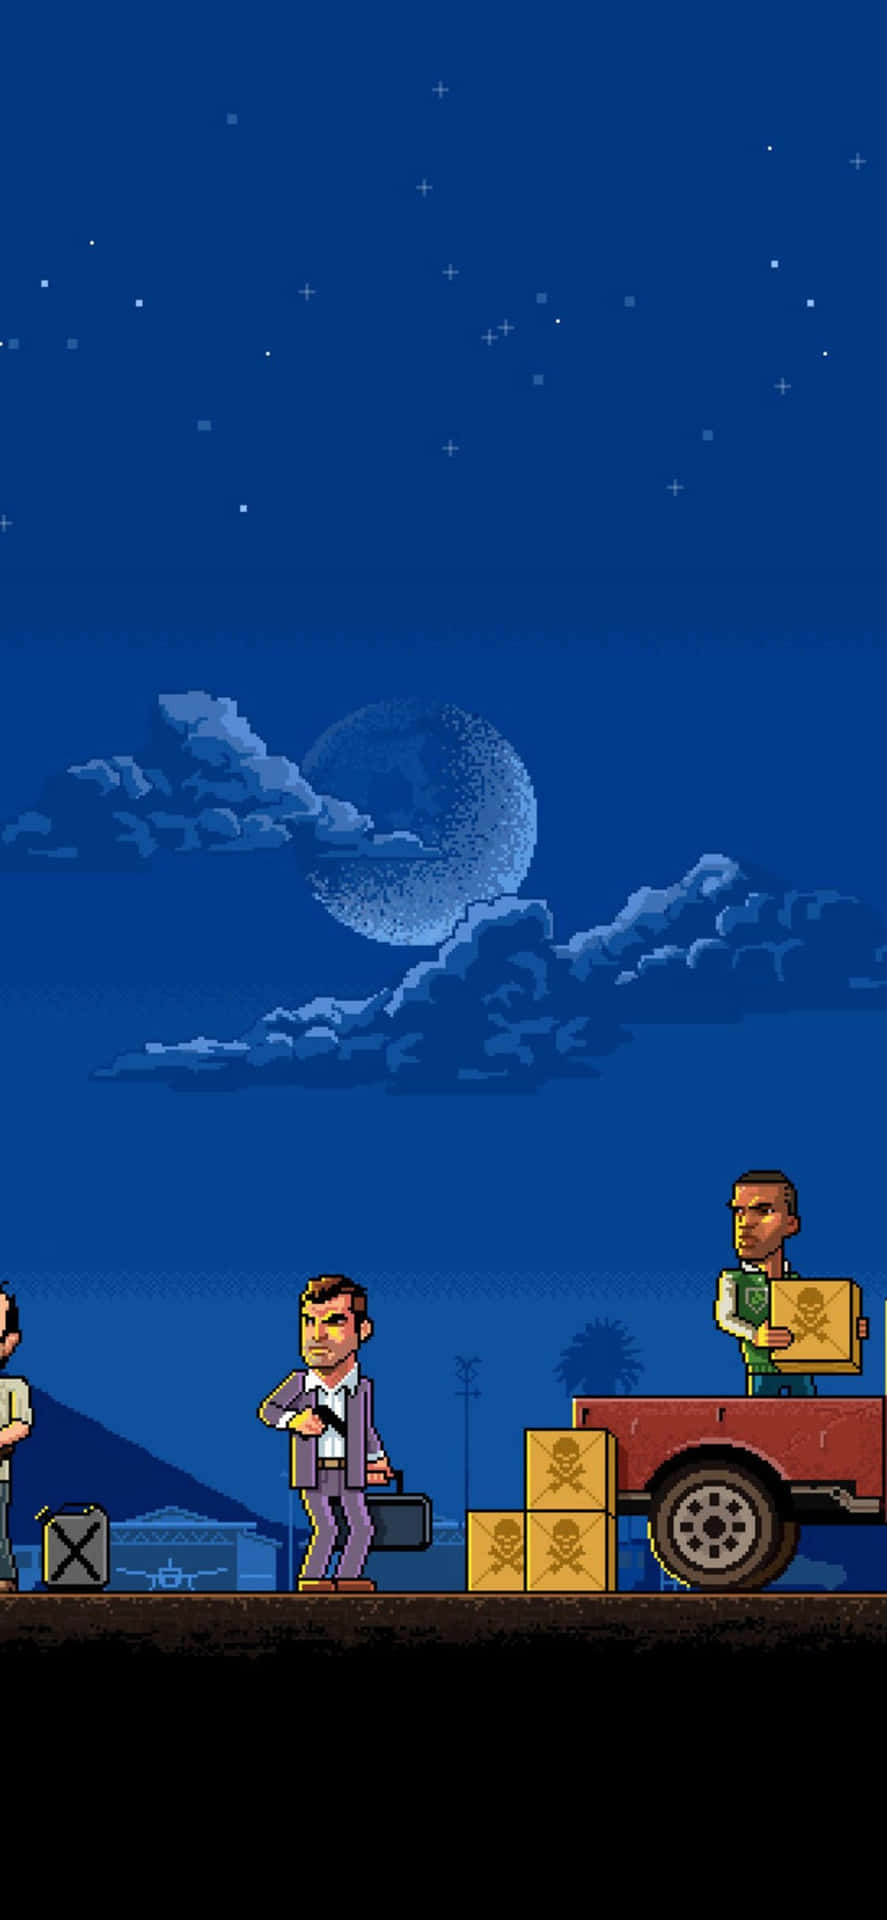 Iphonex-bakgrund Med Grand Theft Auto V I Pixel Art.